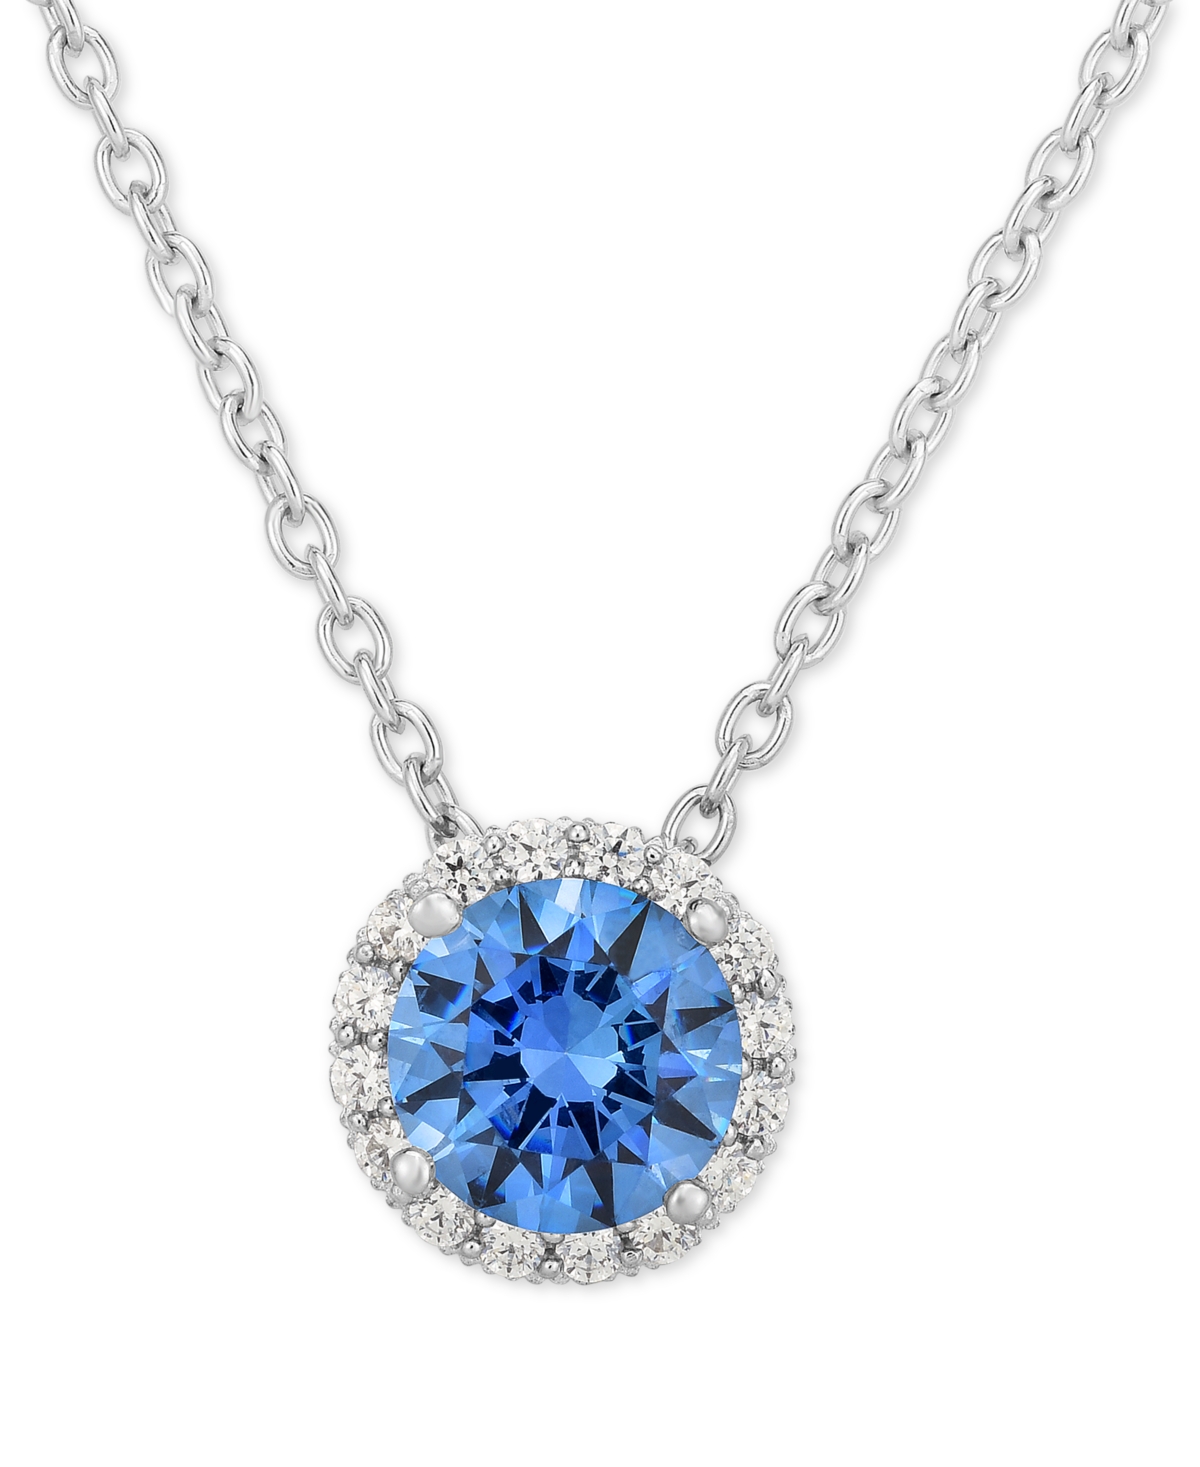 Arabella Blue Cubic Zirconia 18" Pendant Necklace in Sterling Silver